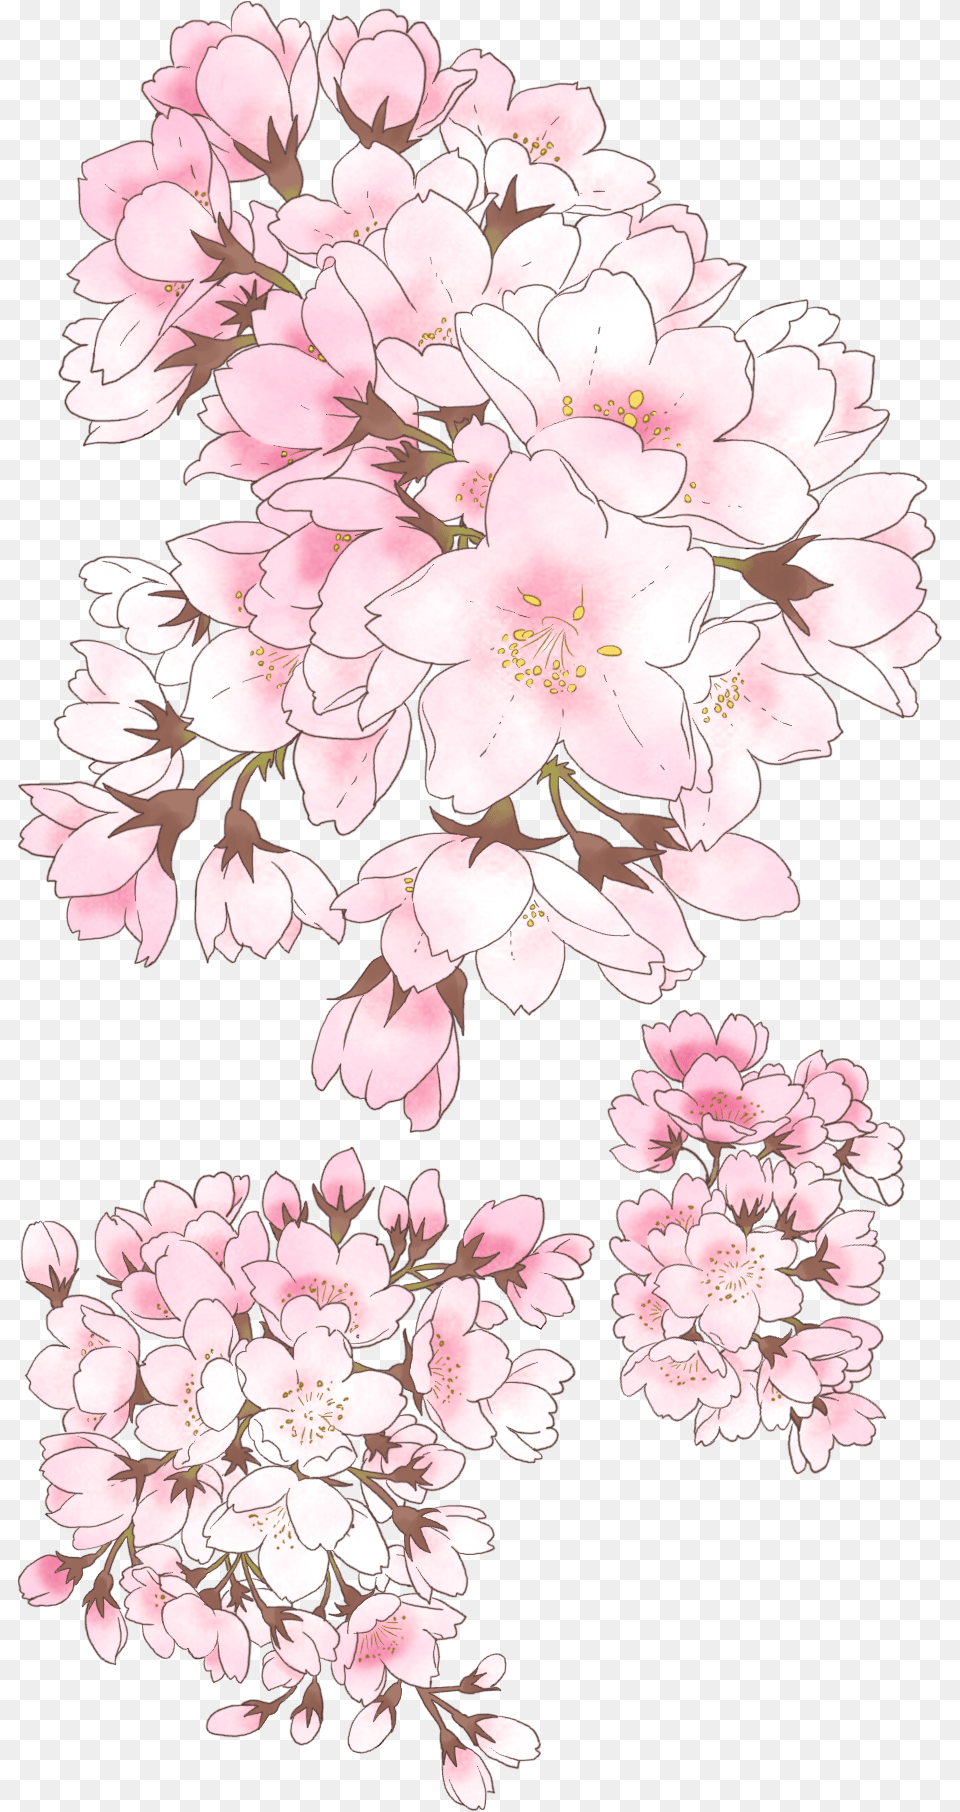 Yvonne De Salle Anime Cherry Blossom Drawing, Flower, Plant, Petal, Cherry Blossom Png